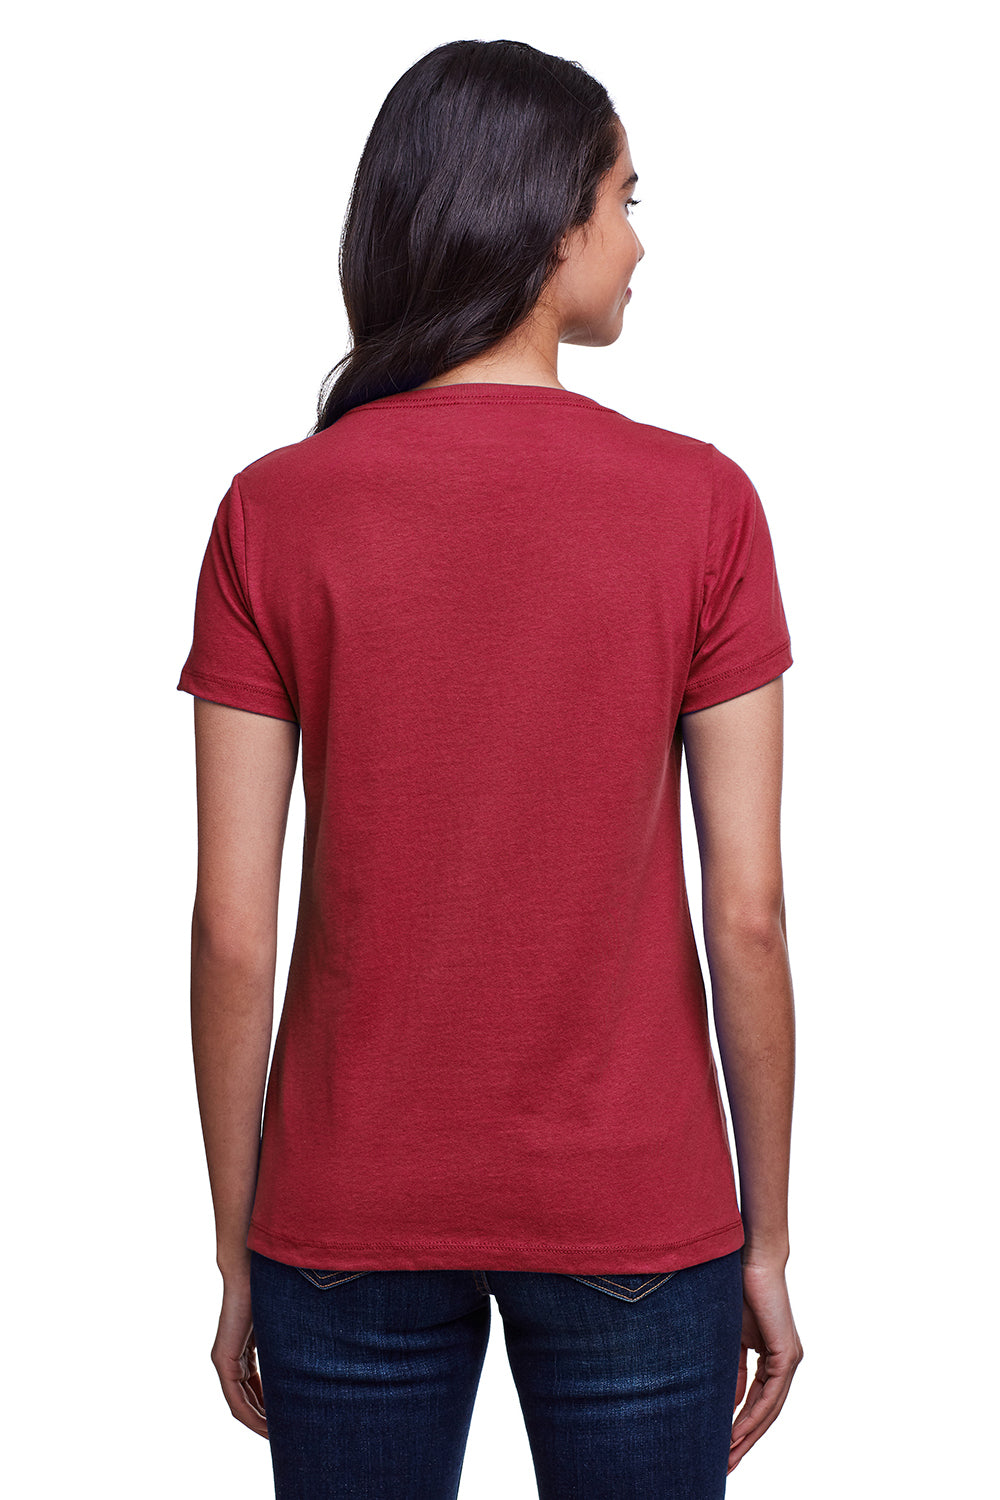 Next Level N4240 Womens Eco Performance Moisture Wicking Short Sleeve V-Neck T-Shirt Cardinal Red Back